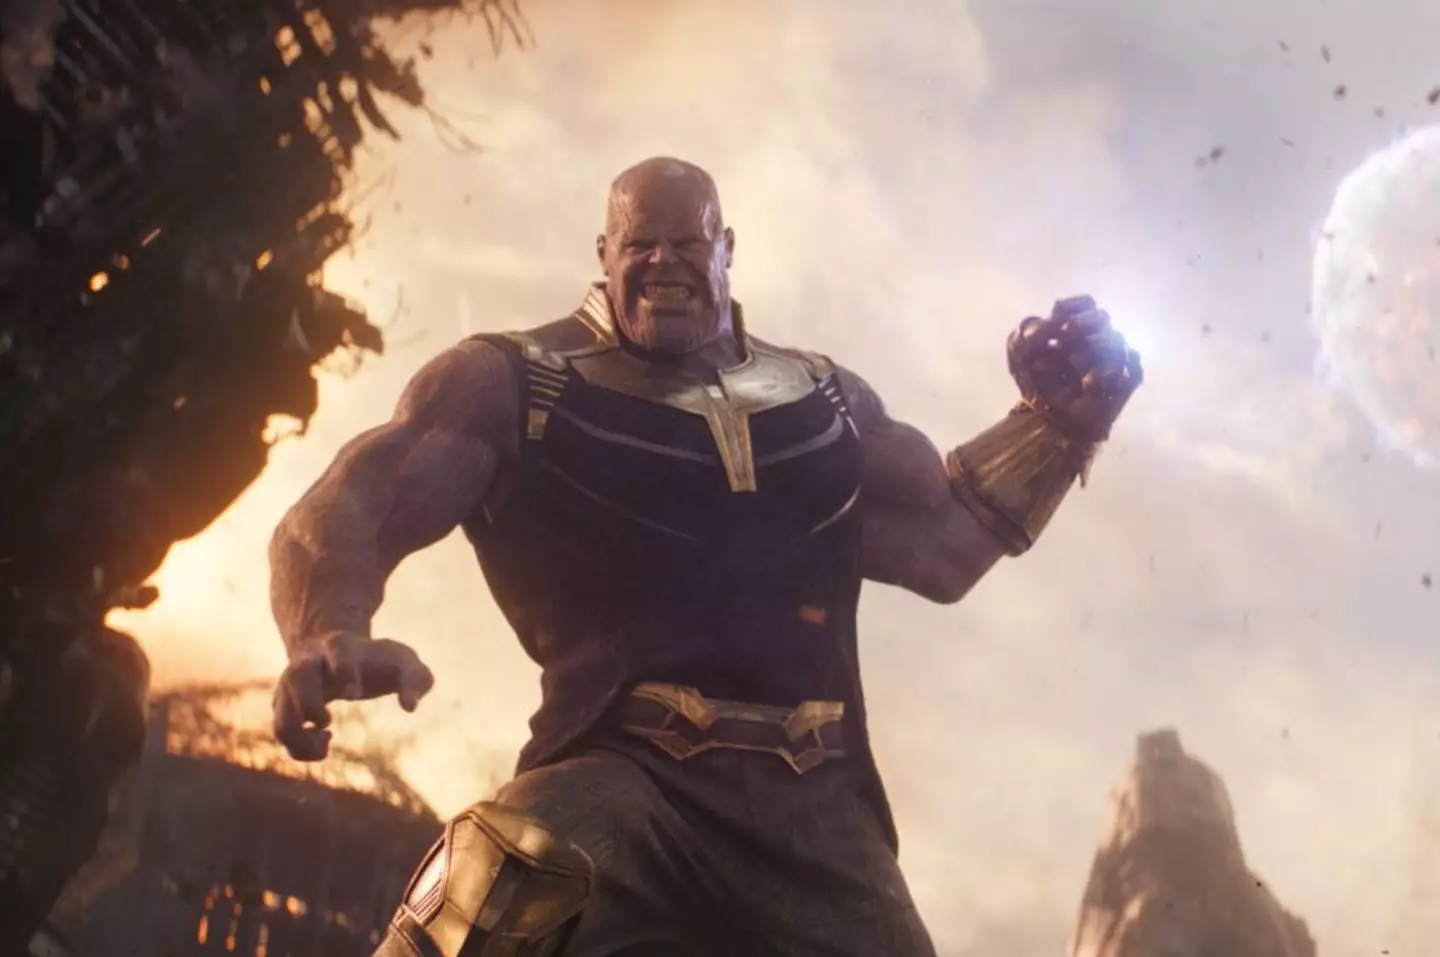 Thanos looking good, despite James Cameron's claims